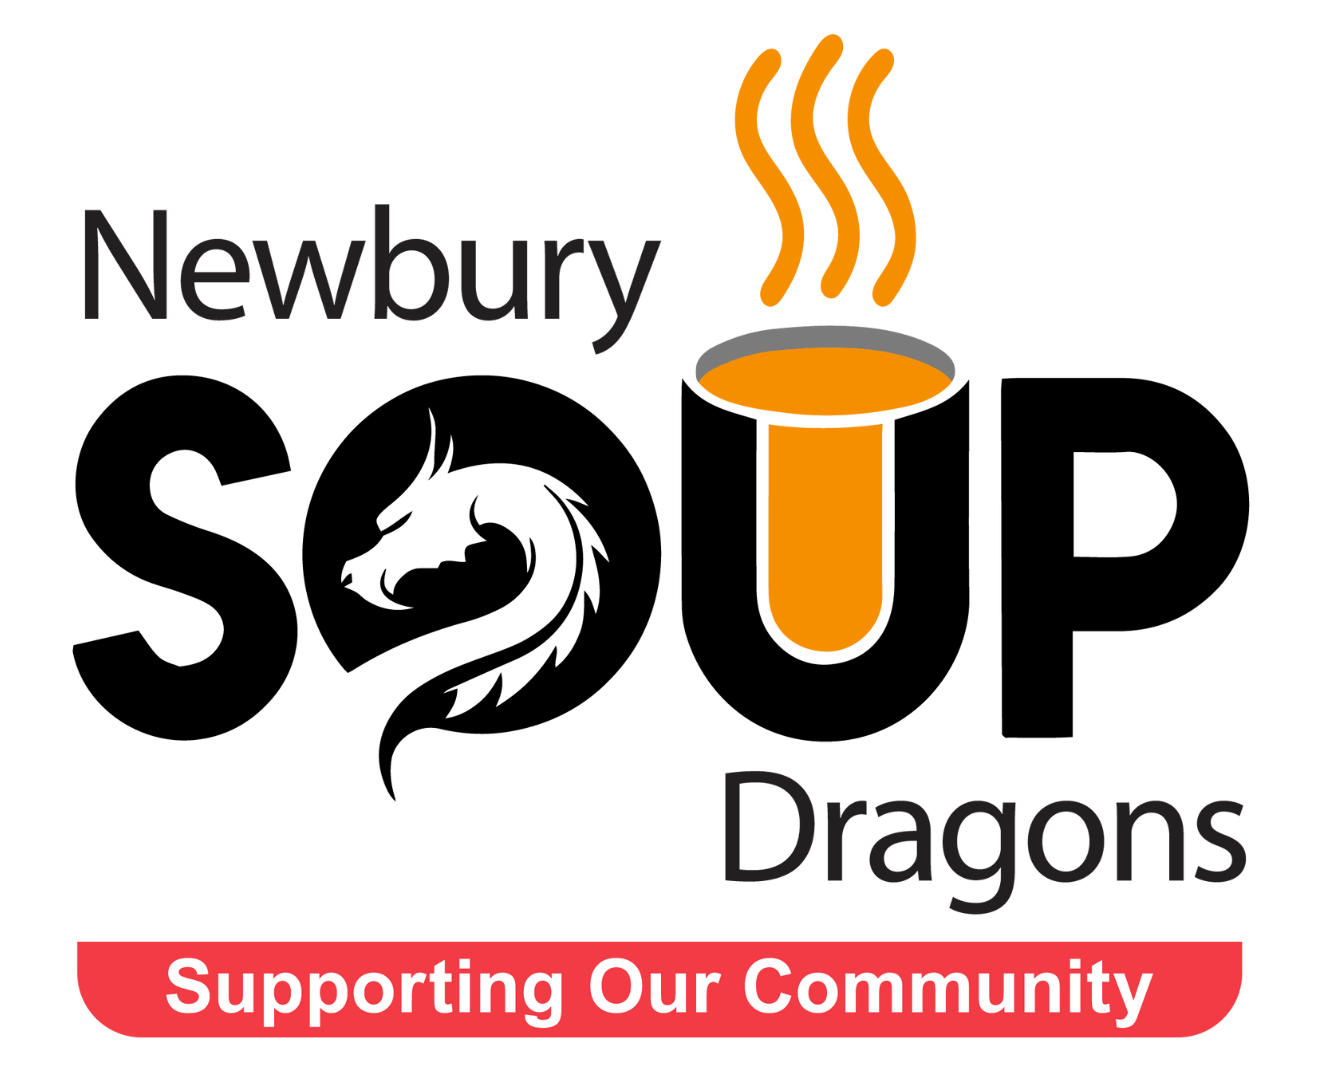 Newbury Soup Dragons logo